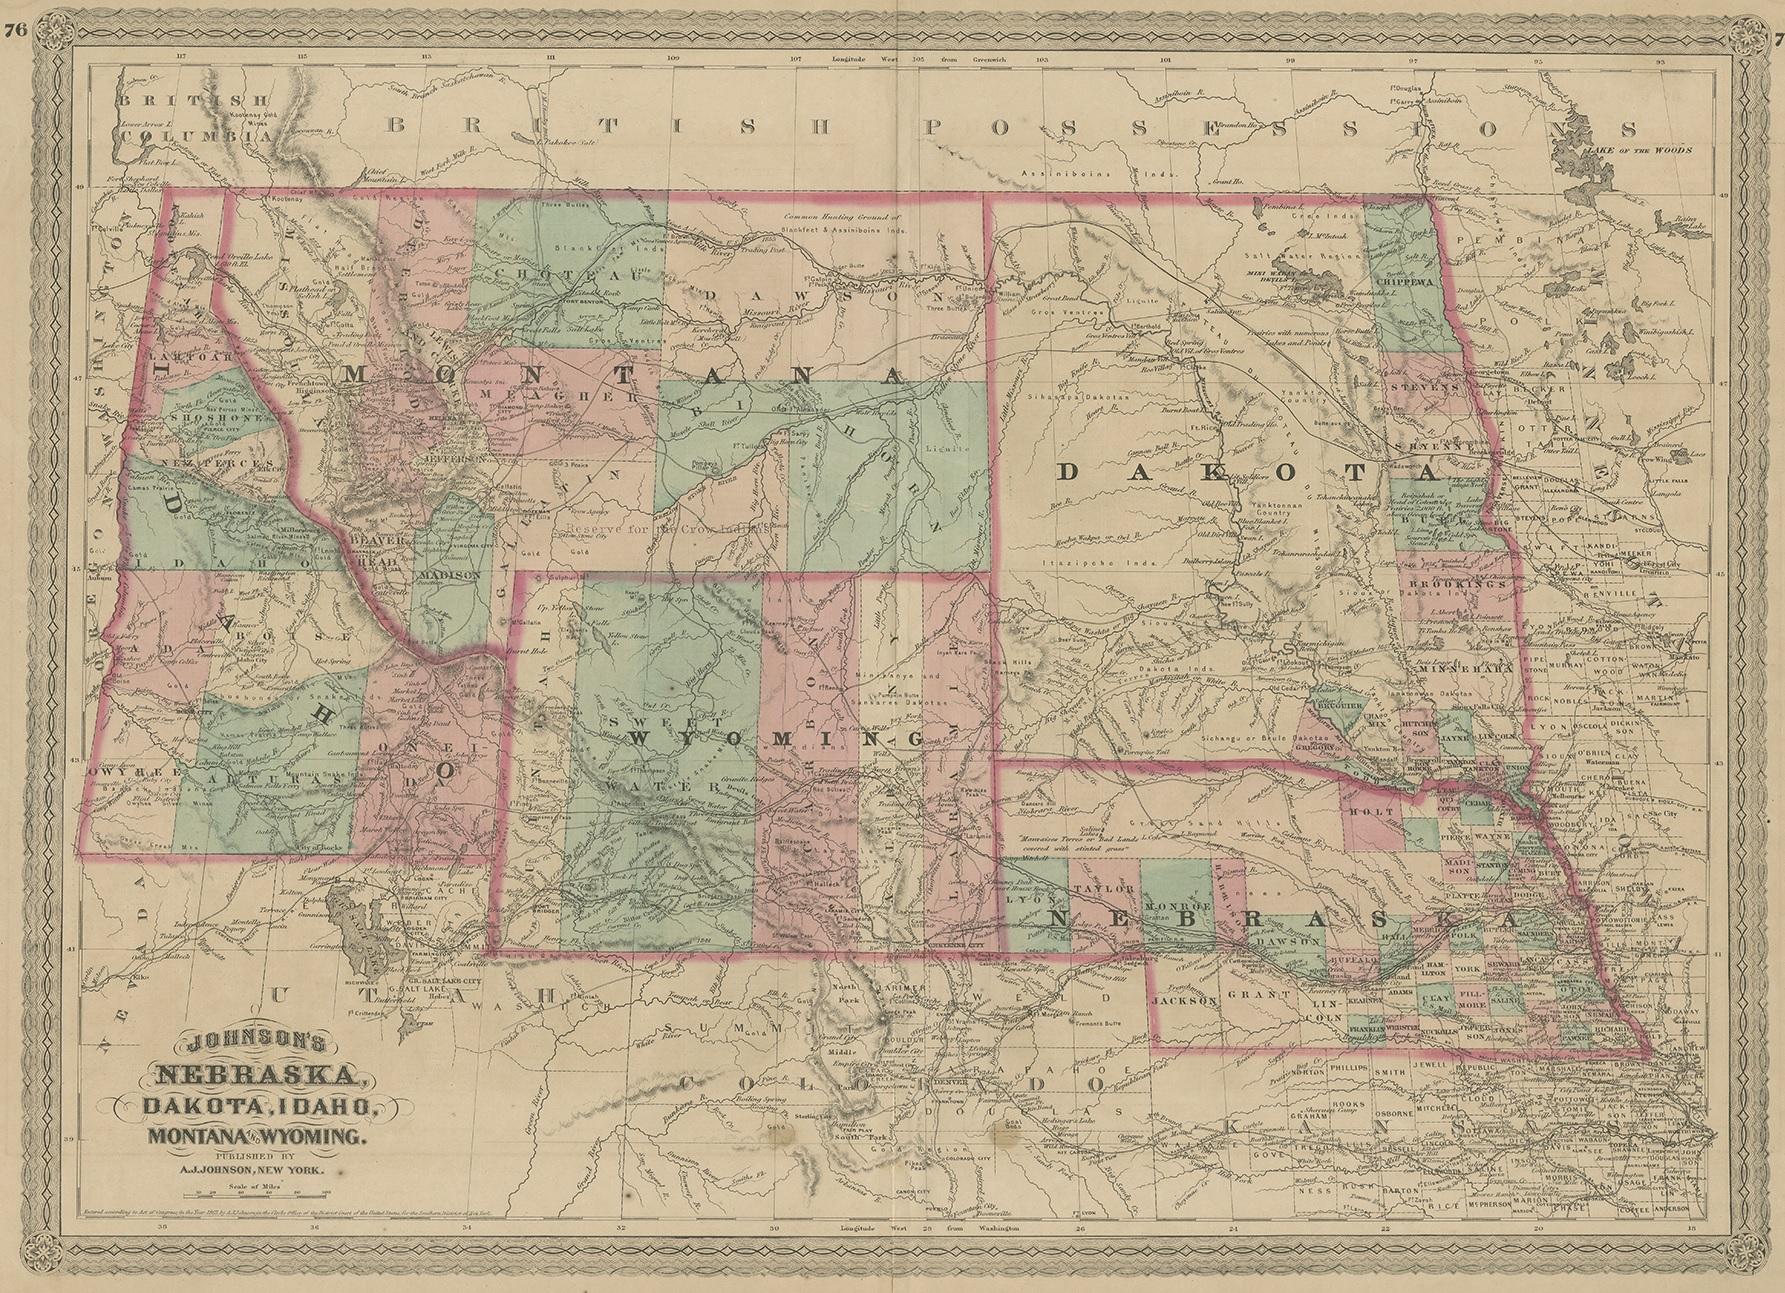 Antique map titled 'Johnson's Nebraska (..)'. Original map of Nebraska, Dakota, Idaho, Montana and Wyoming. This map originates from 'Johnson's New Illustrated Family Atlas of the World' by A.J. Johnson. Published 1872.